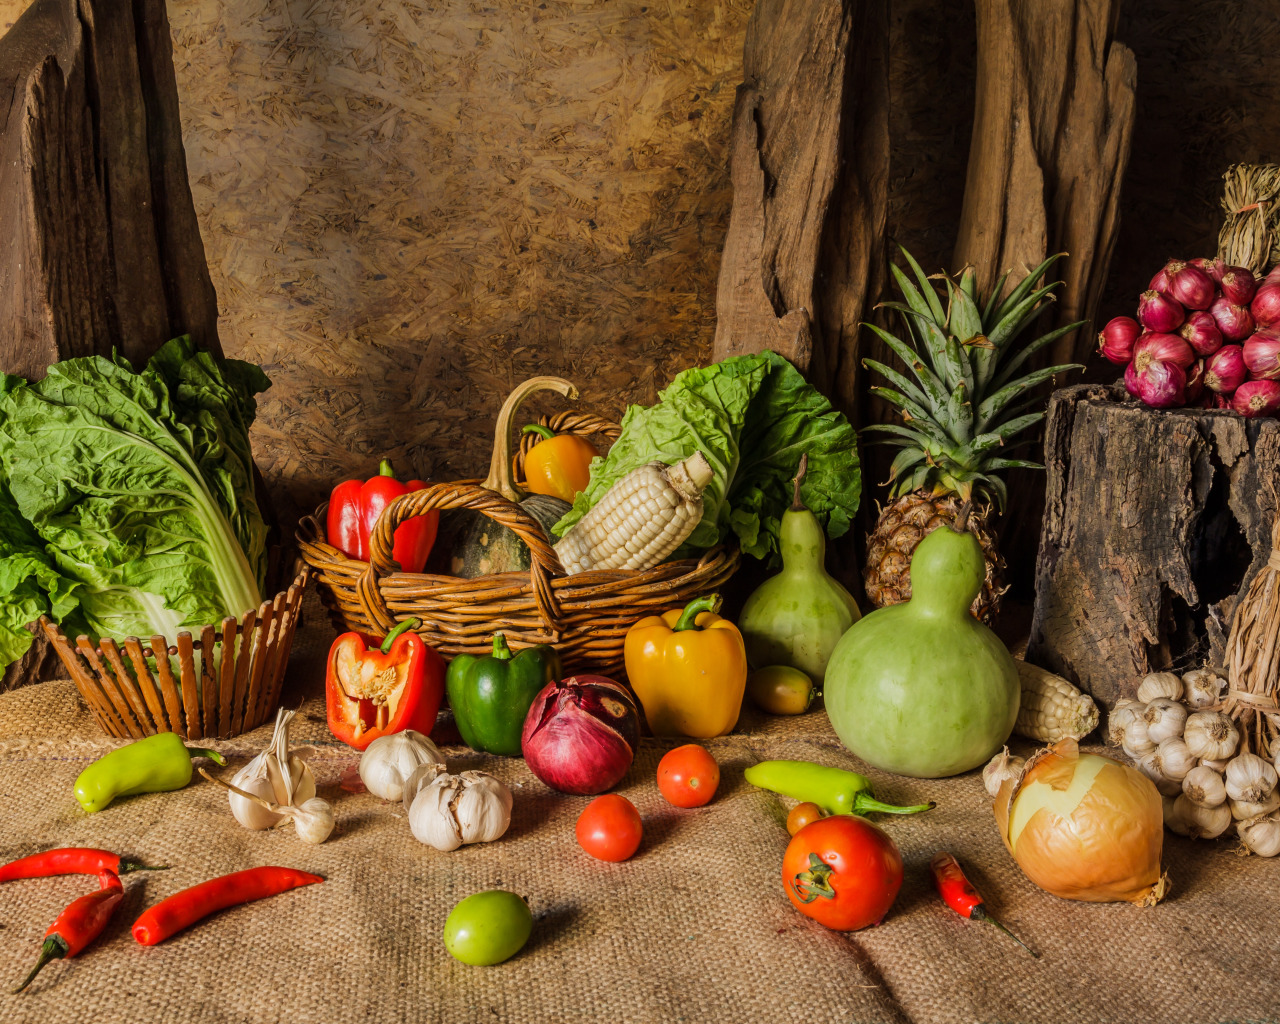 Натюрморт с овощами. Натюрморт с овощами фото. Михайлов натюрморт овощи и фрукты. Still Life with Vegetables, Fruits and a Mug.